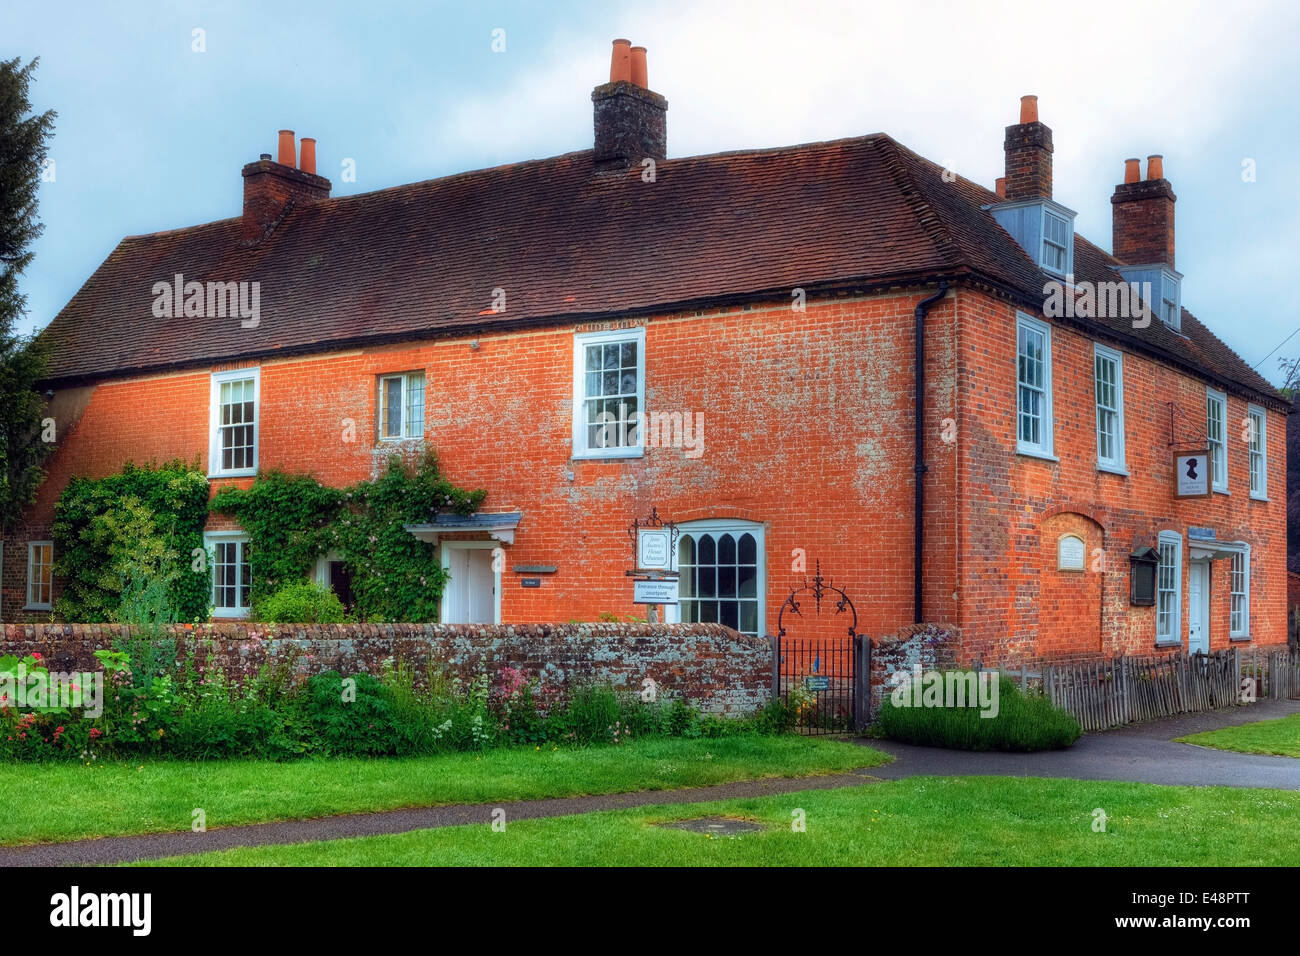 Jane Austen's House Museum, Chawton, Hampshire, England, United Kingdom Stock Photo